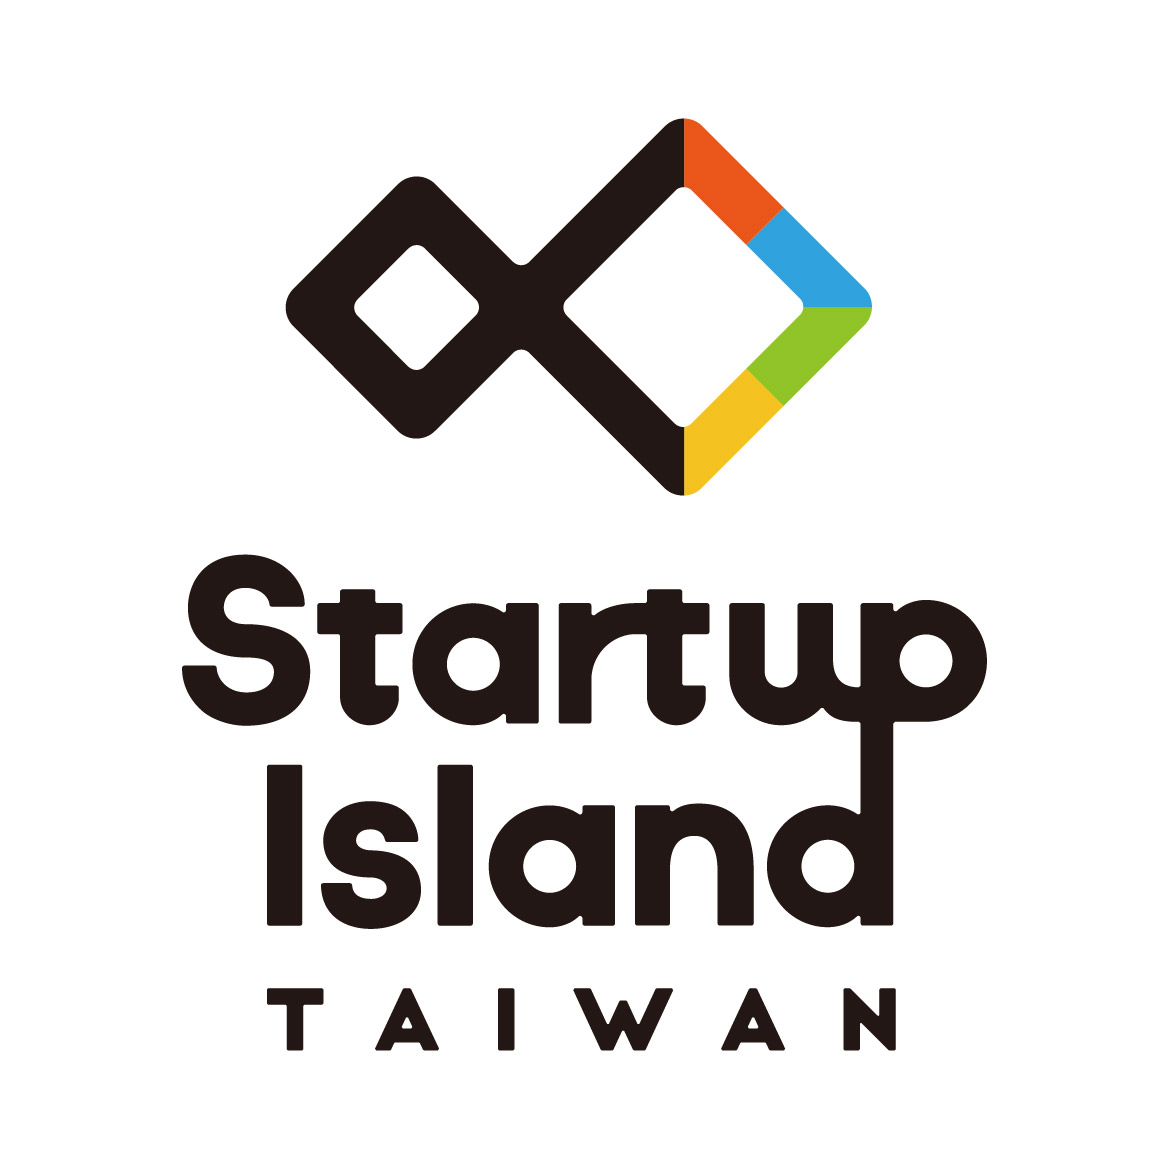 Startup Island TAIWAN - Taiwan’s startup ecosystem is on the upward trajectory, gaining …